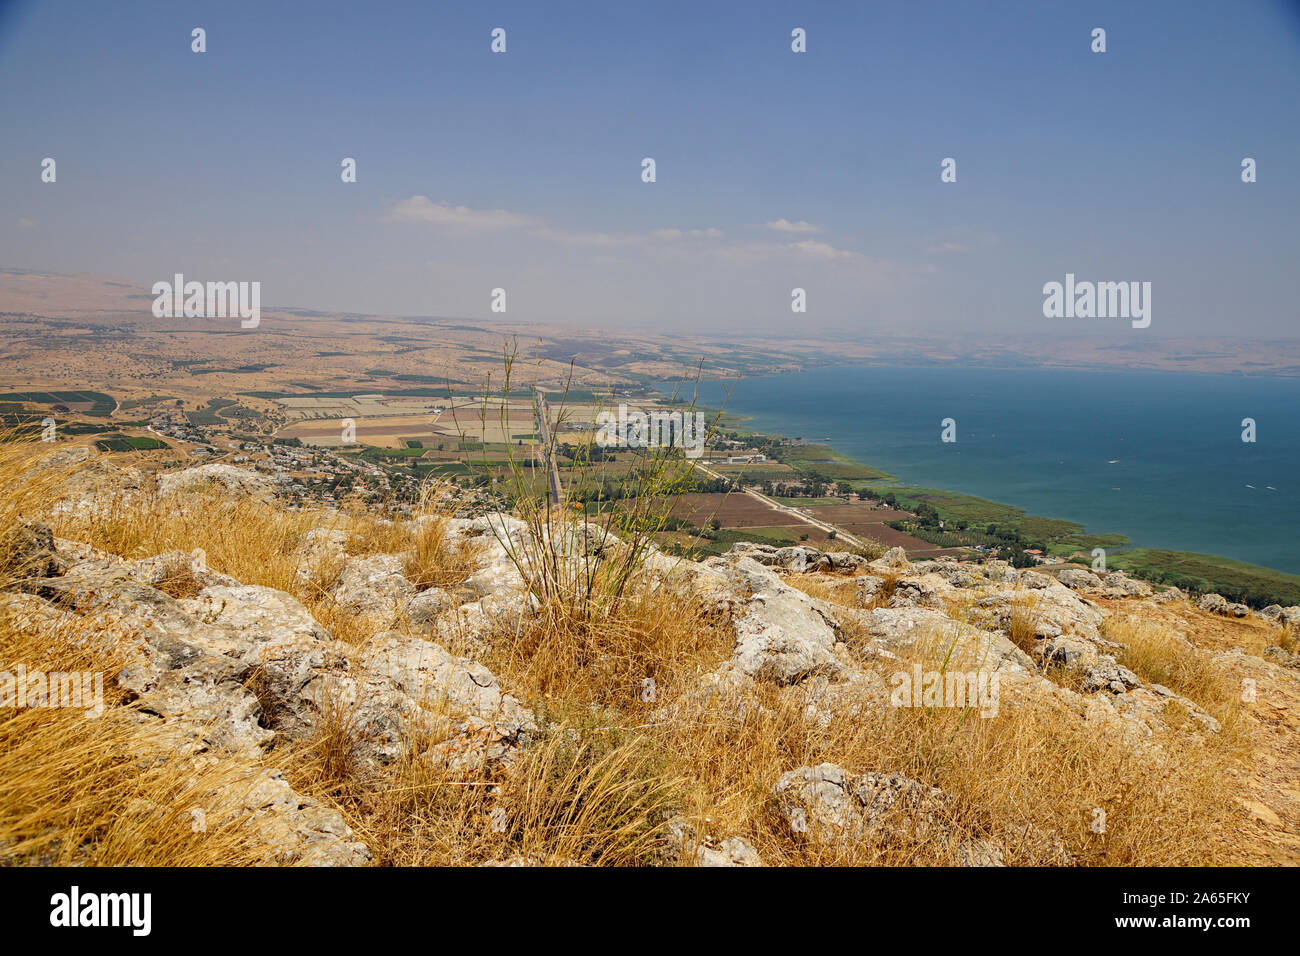 Berg Arbel Naturpark und Nationalpark, Galiläa, Israel mit Blick auf das Meer o f Galiläa Stockfoto